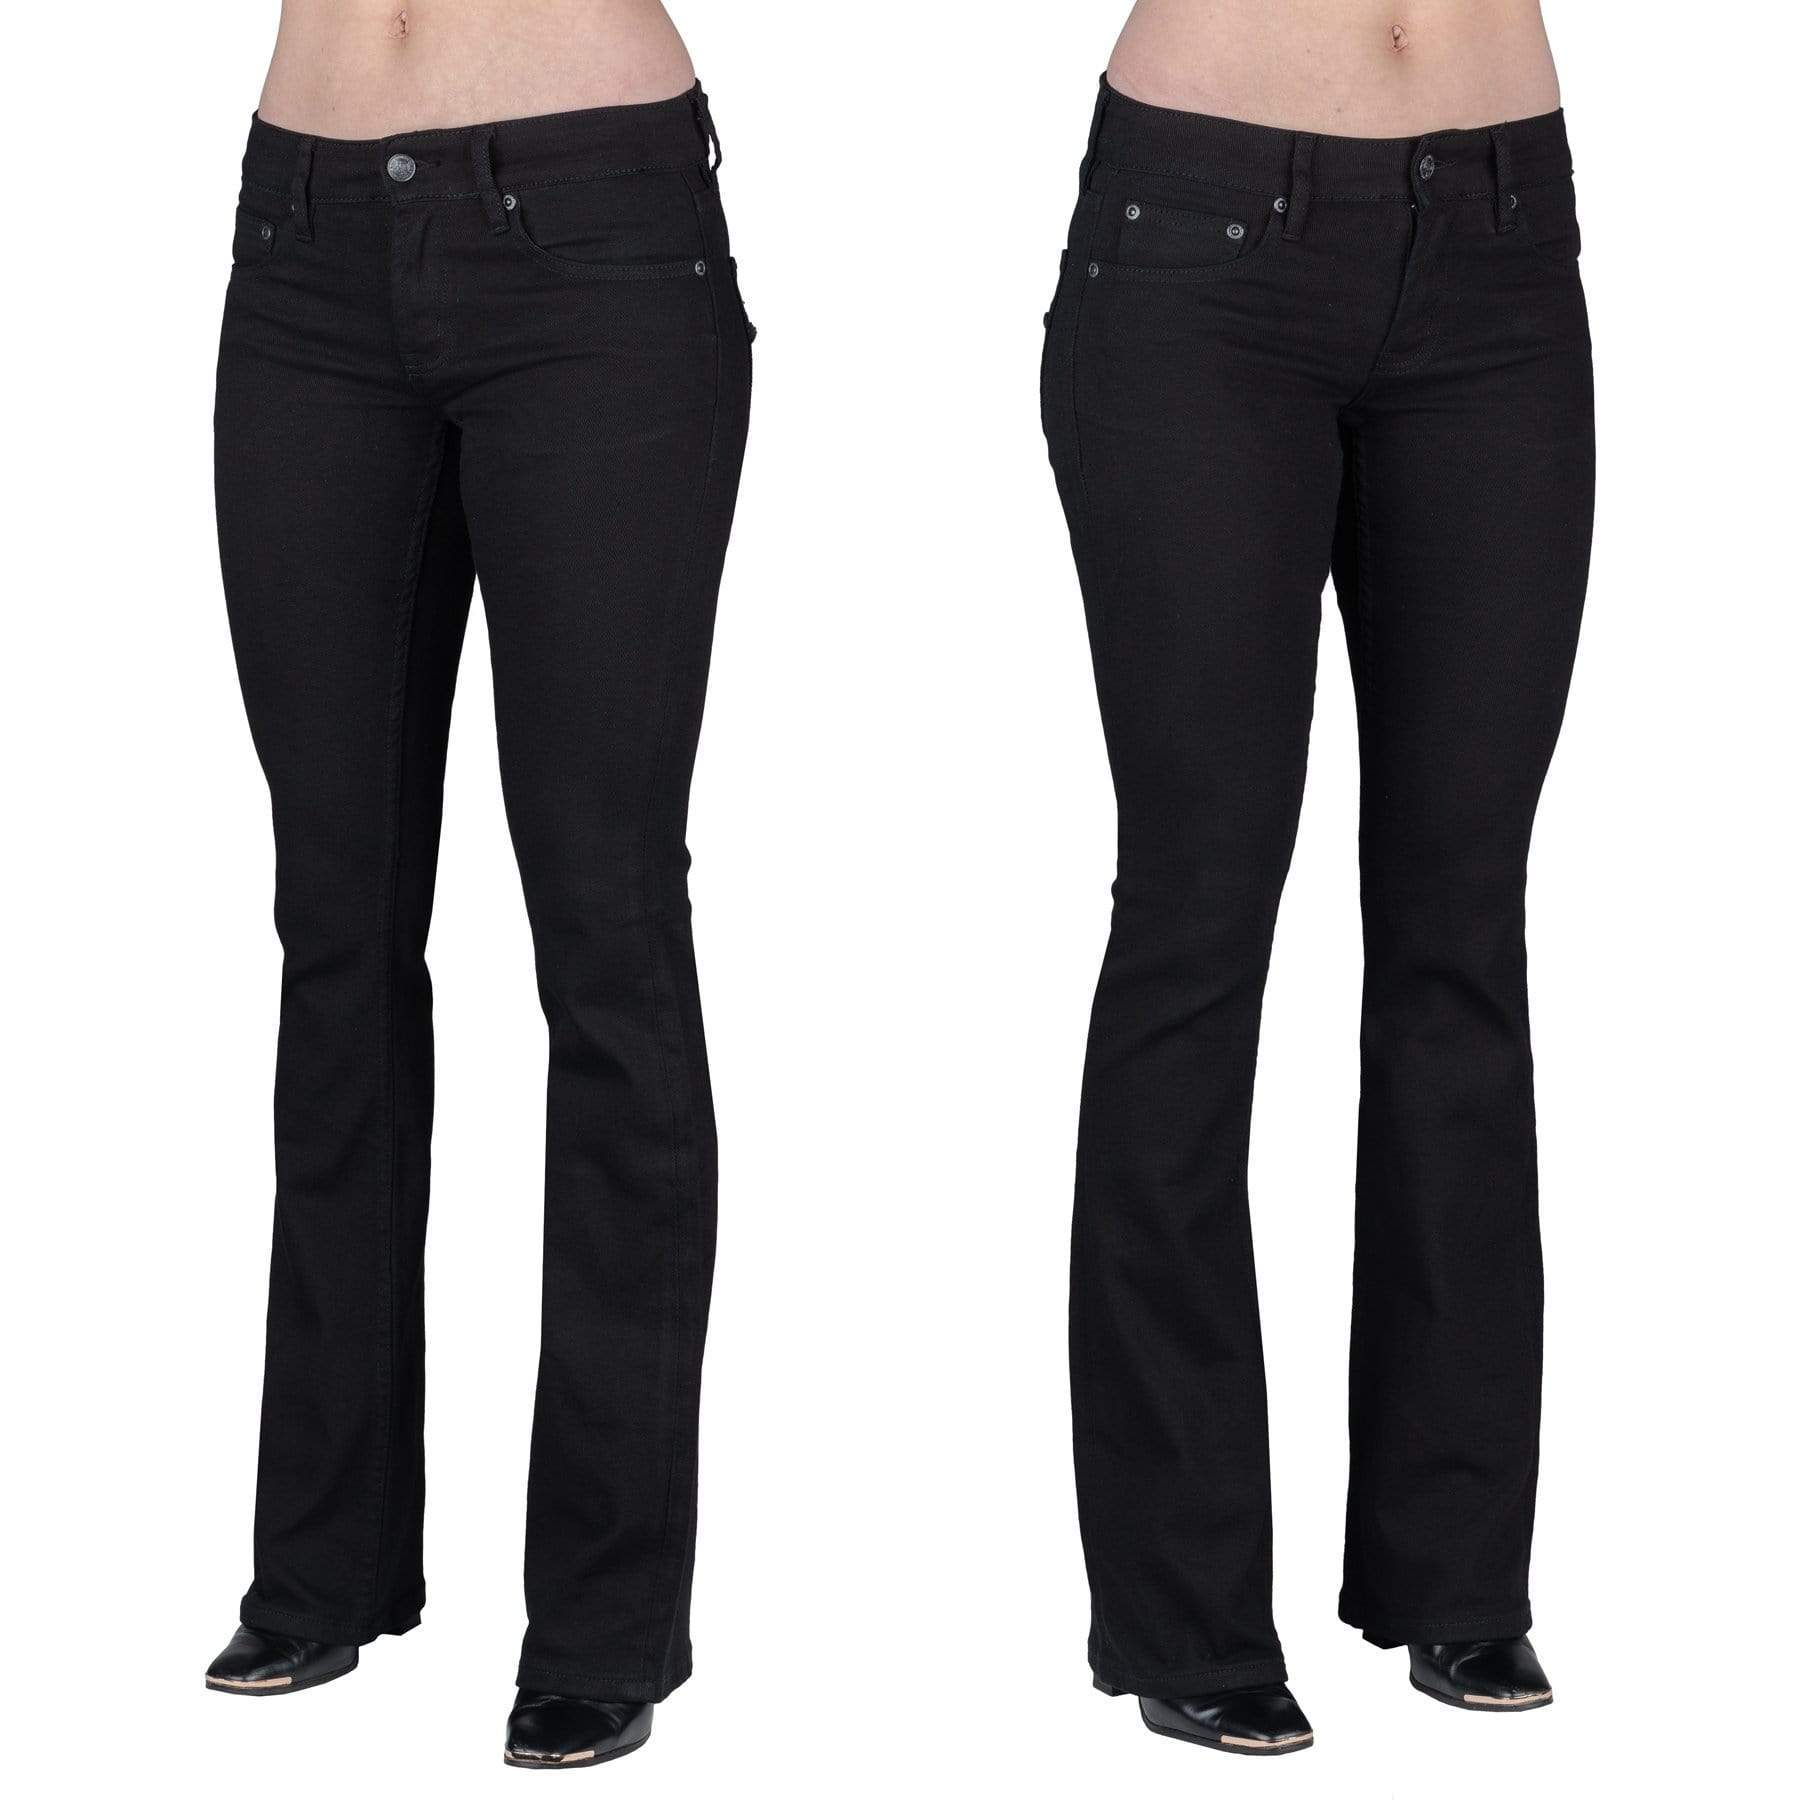 Wornstar Clothing Pants Hellraiser Unisex Jeans - Black